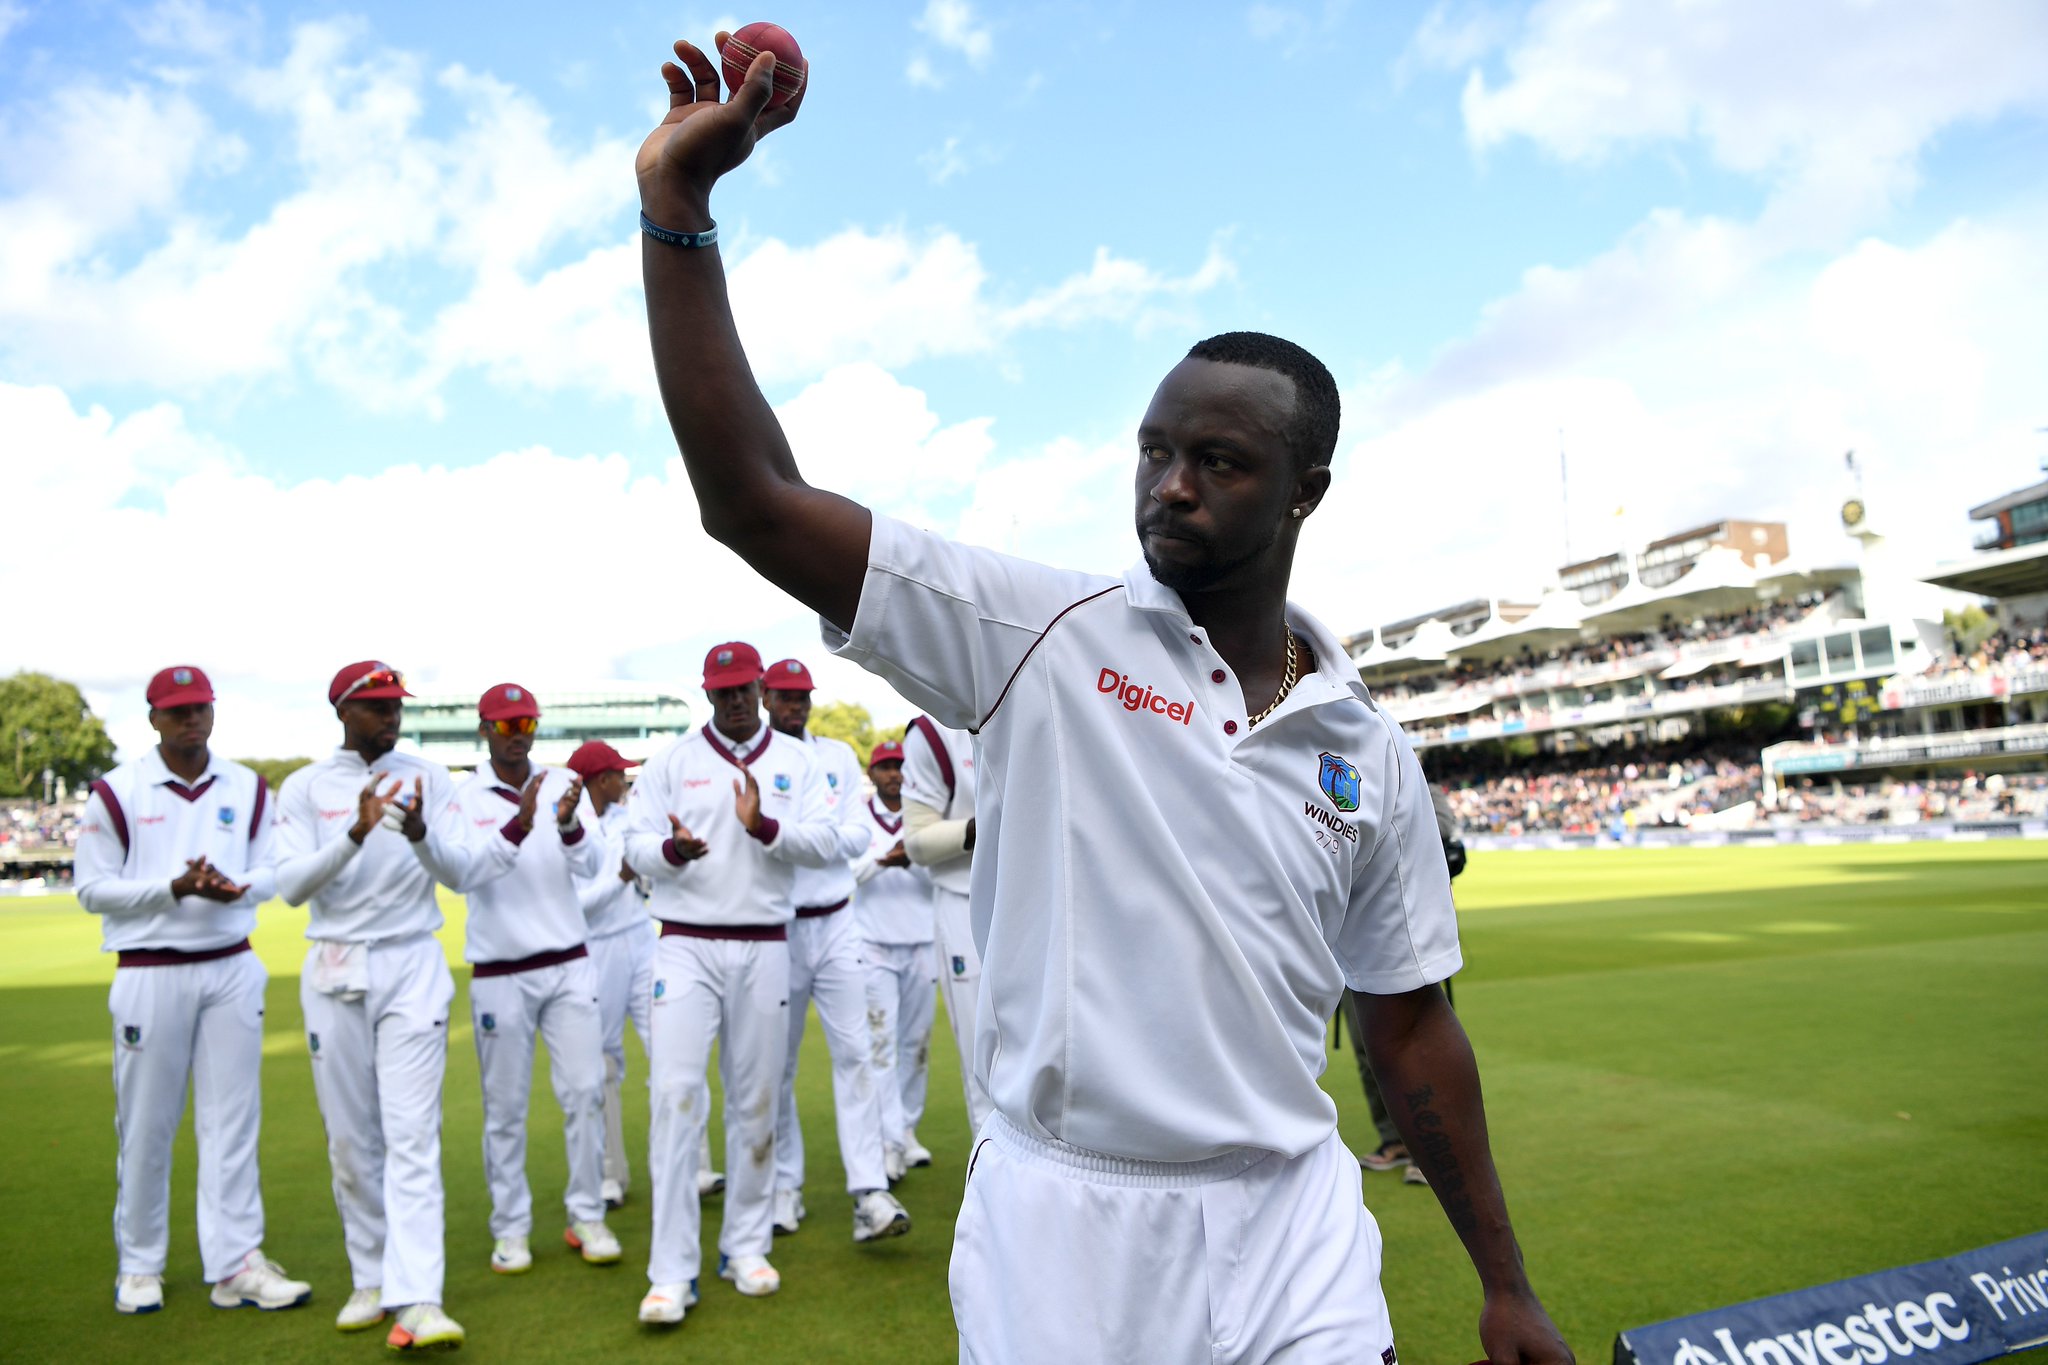 ‘Feisty’ Kemar Roach brings a familiar Caribbean flavour to world cricket